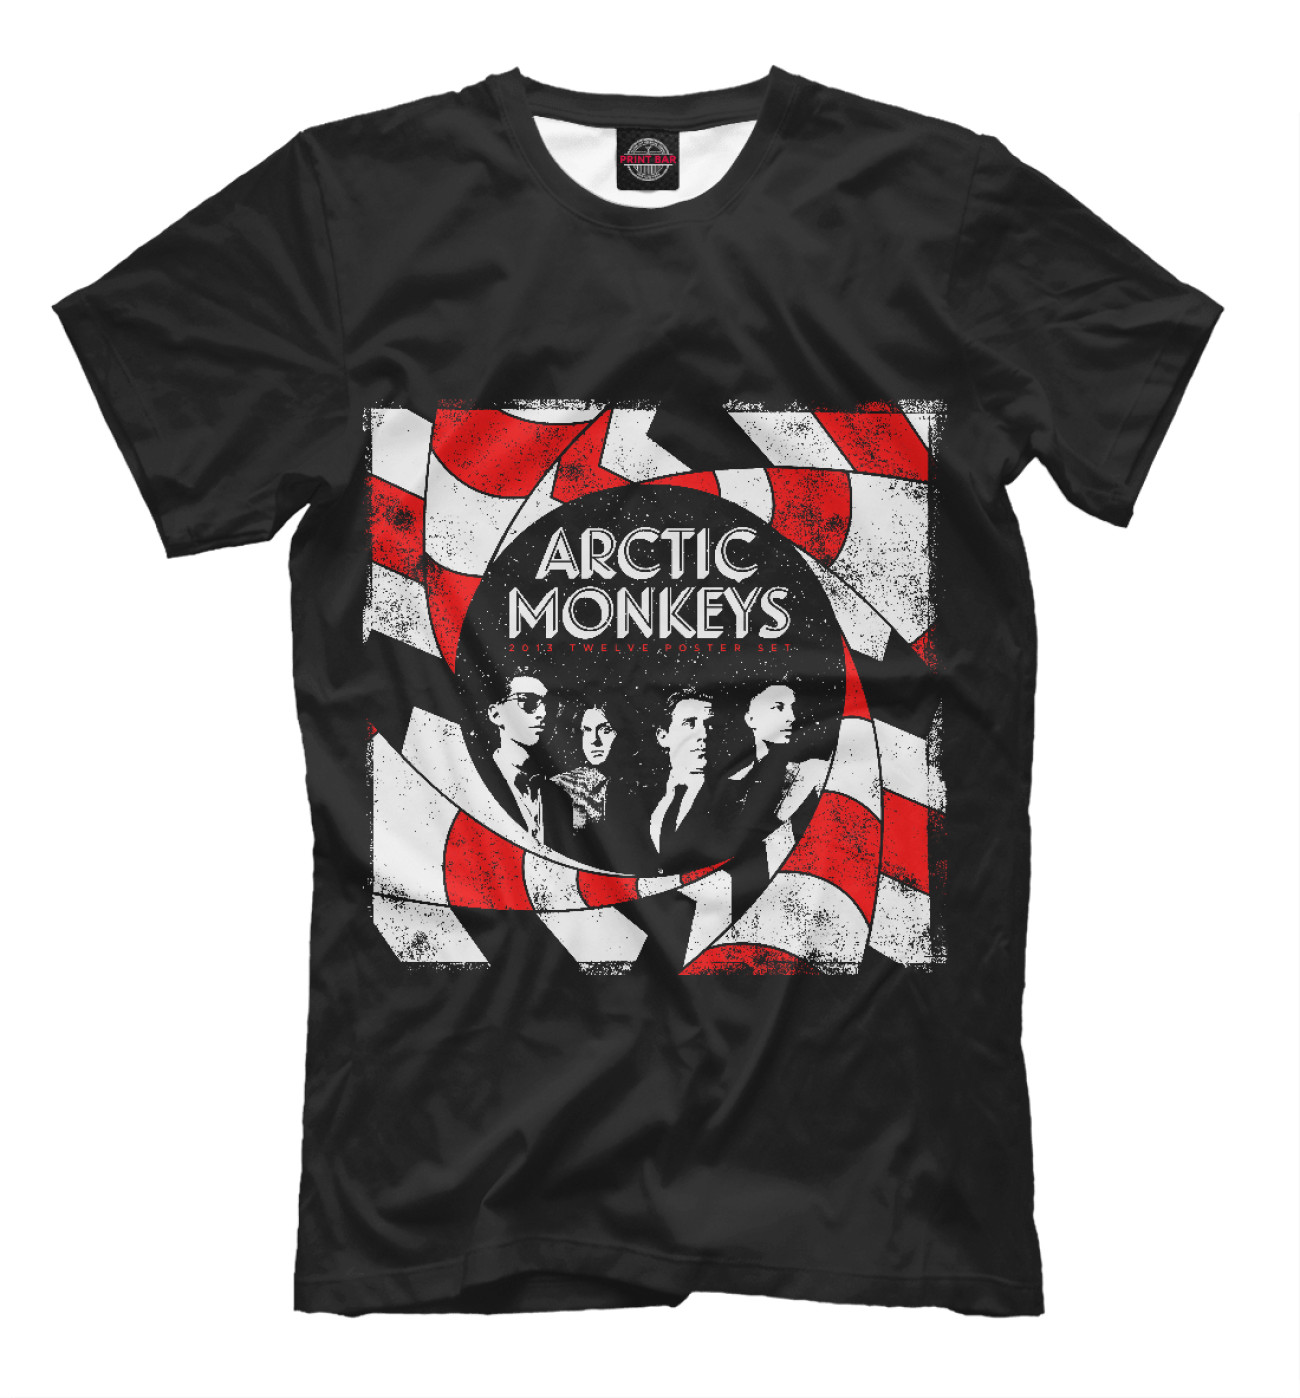 Мужская Футболка Arctic Monkeys, артикул: AMK-320538-fut-2